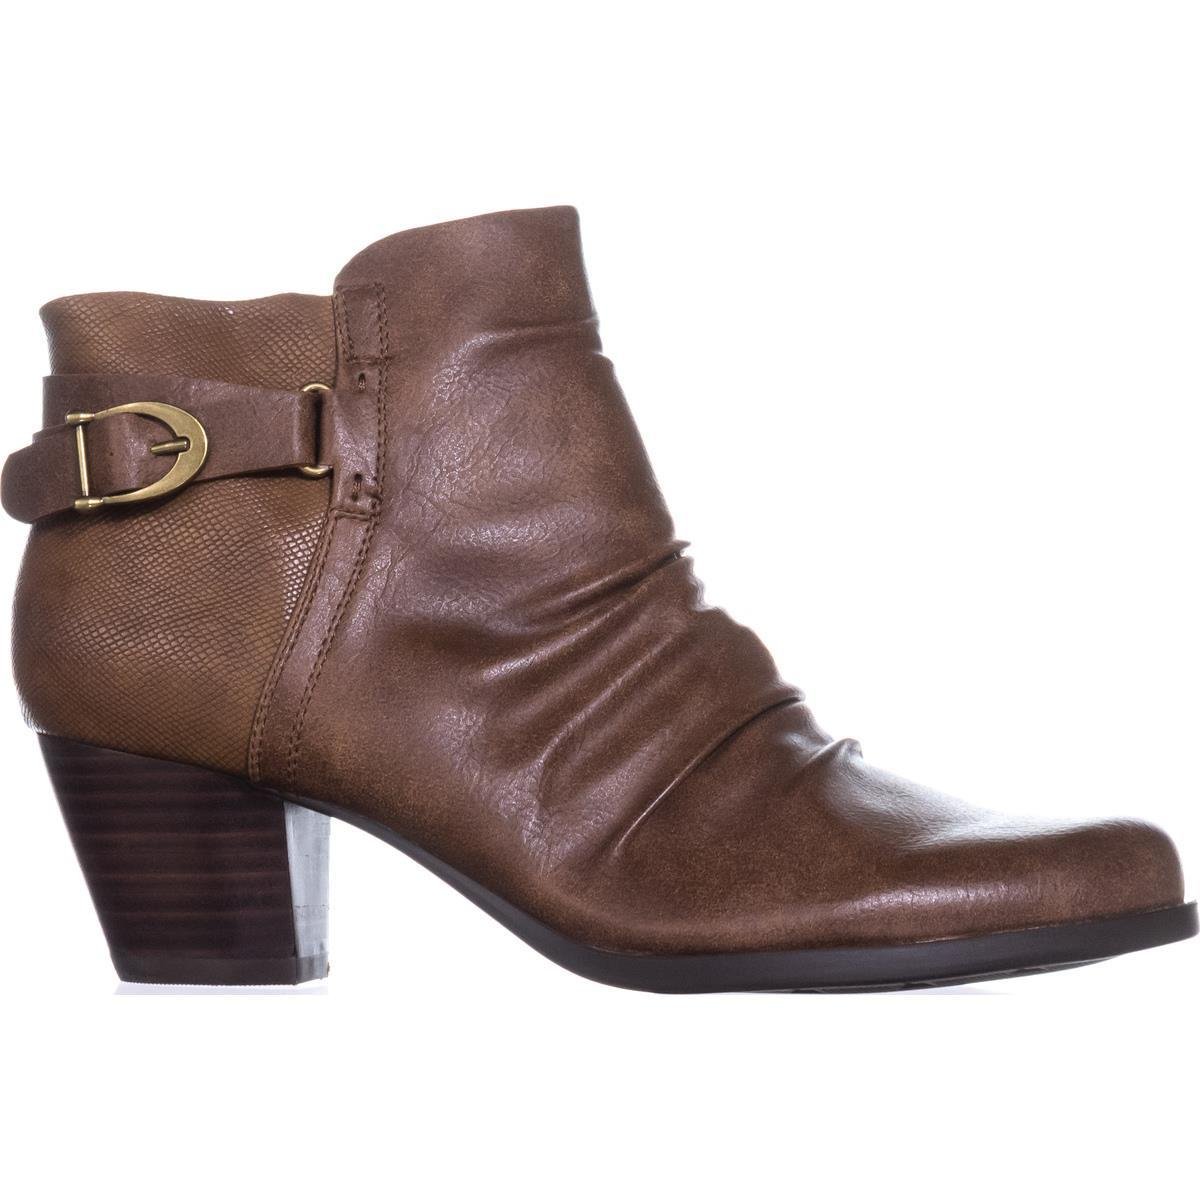 Bare Traps Womens Reliance Almond Toe Ankle Fashion Boots, Cognac, Size ...